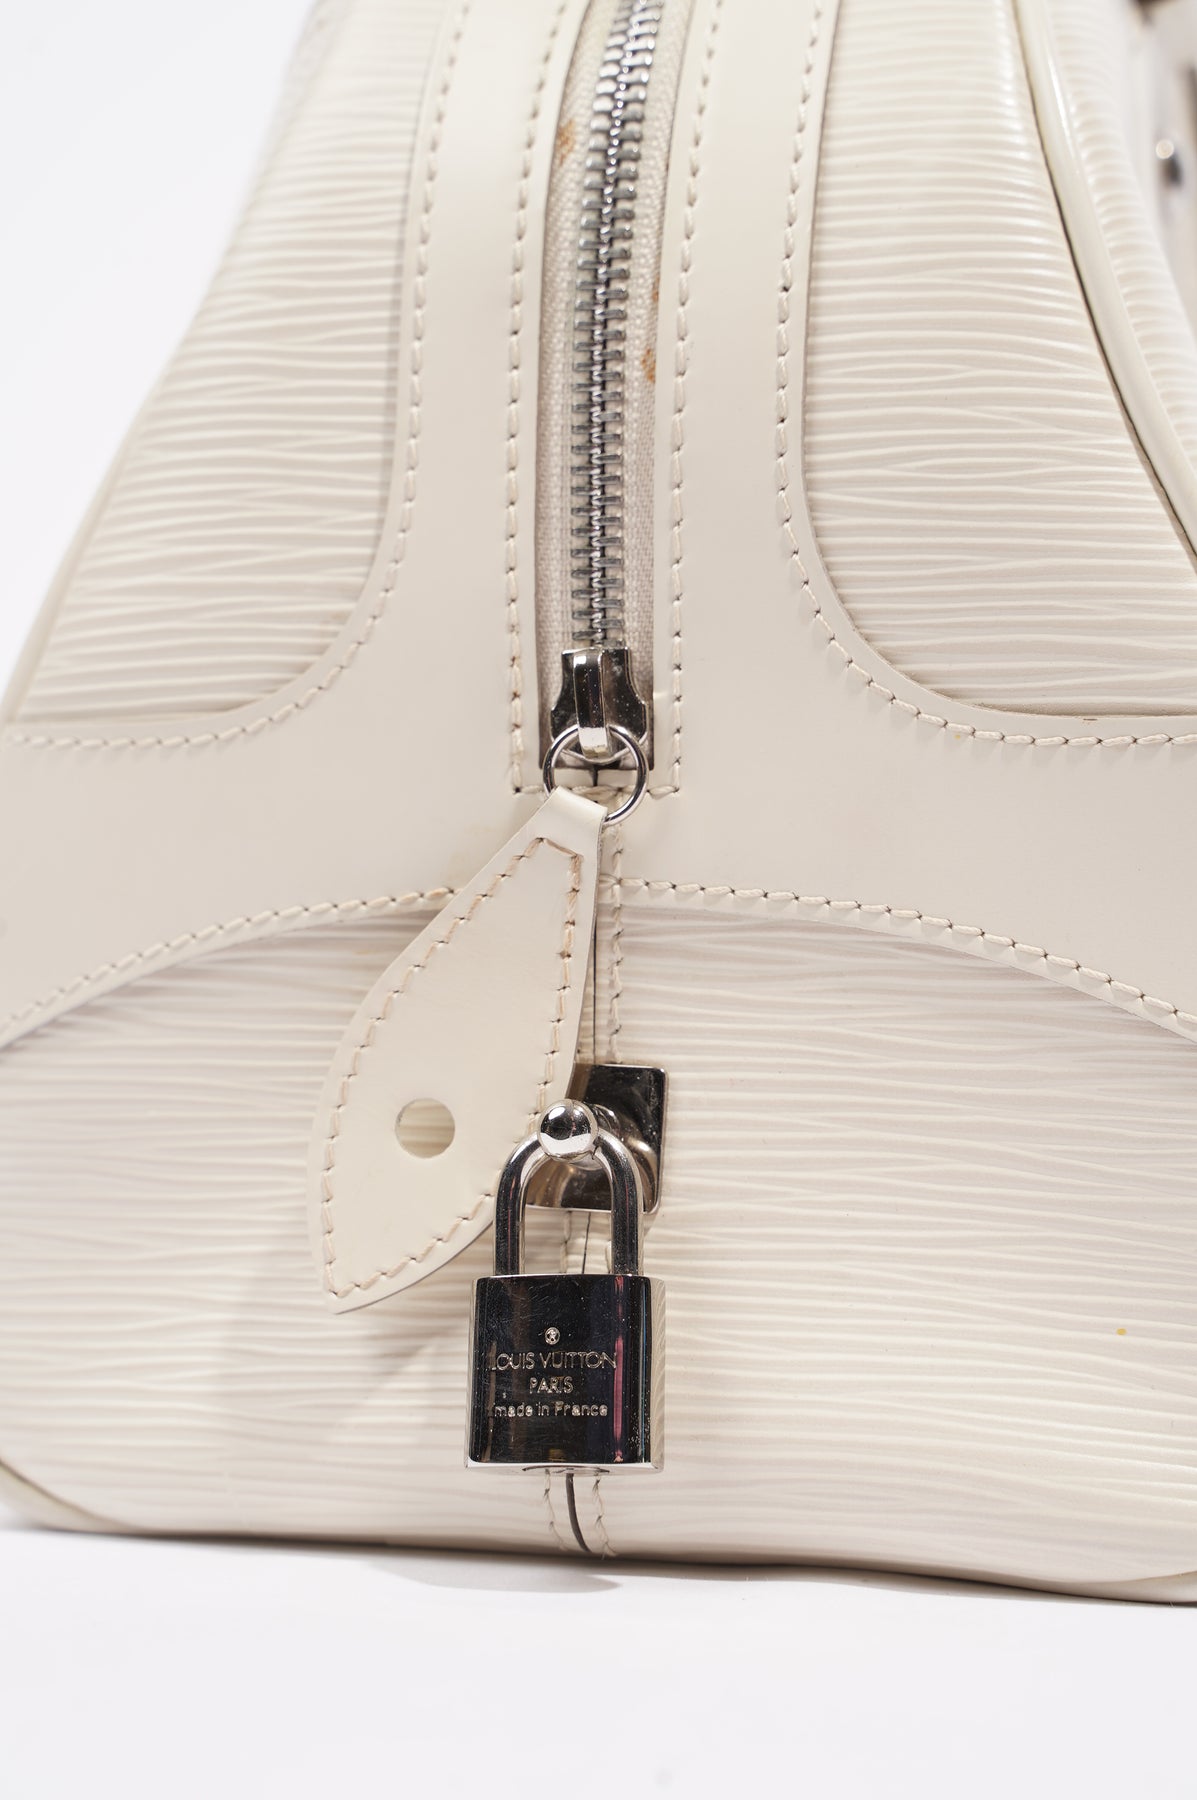 Louis Vuitton White Epi Leather Bowling Montaigne GM Bag